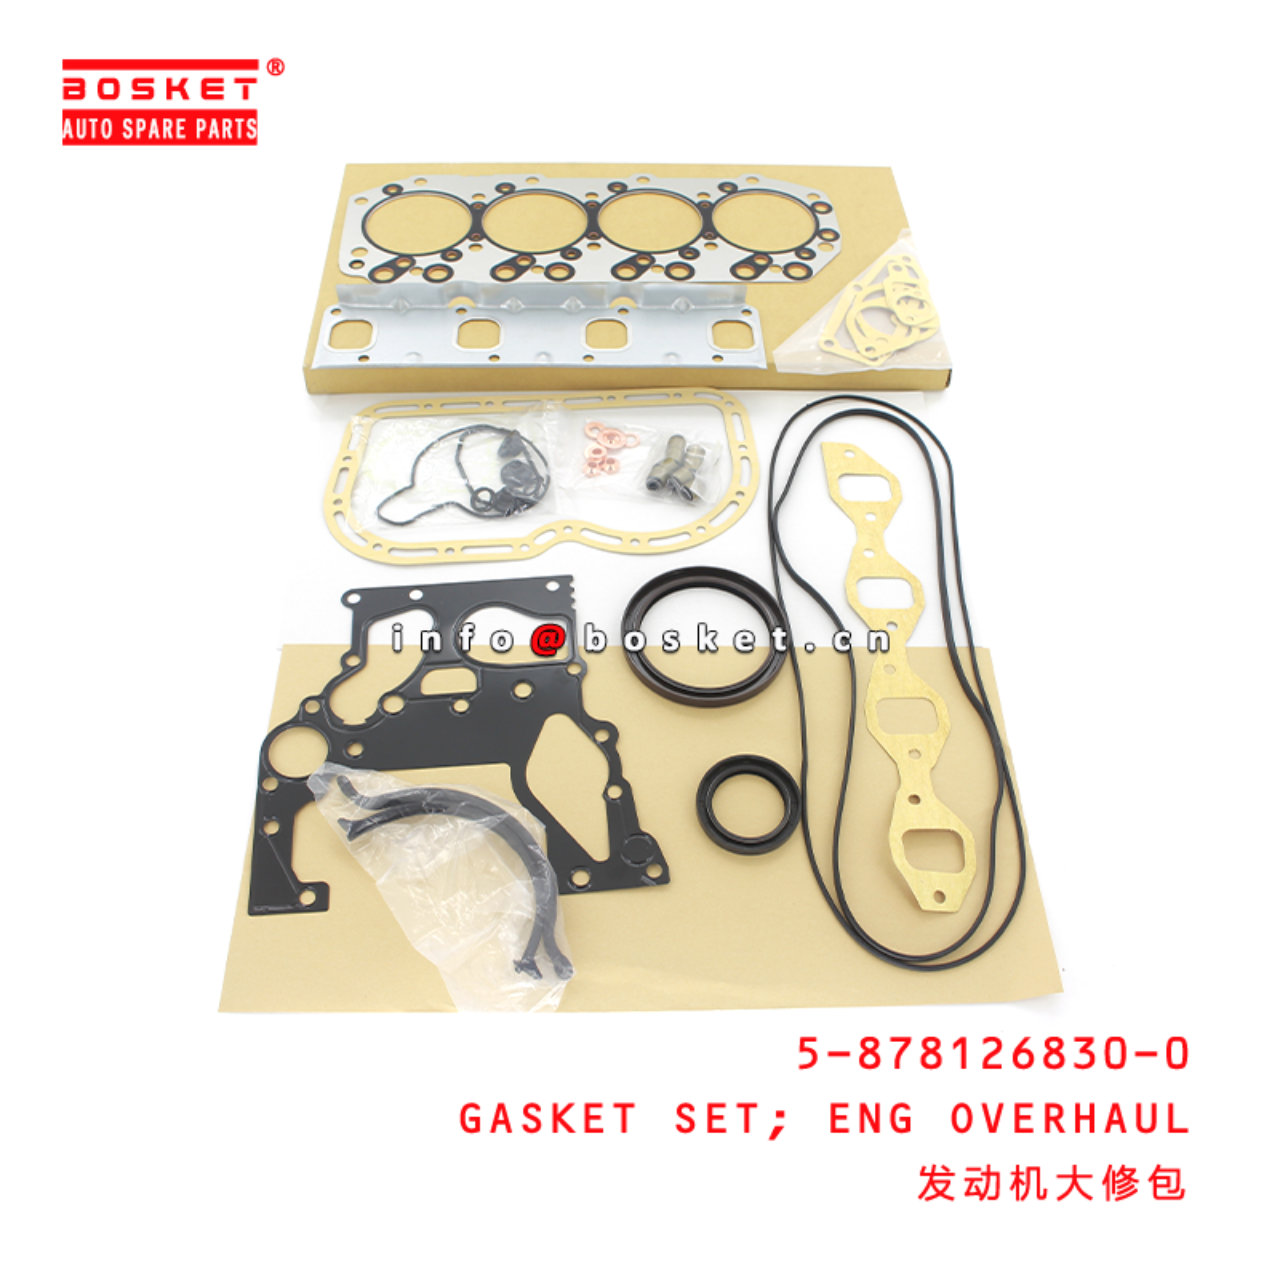 5-878126830-0 Engine Overhaul Gasket Set Suitable for ISUZU TFR54 58781268300